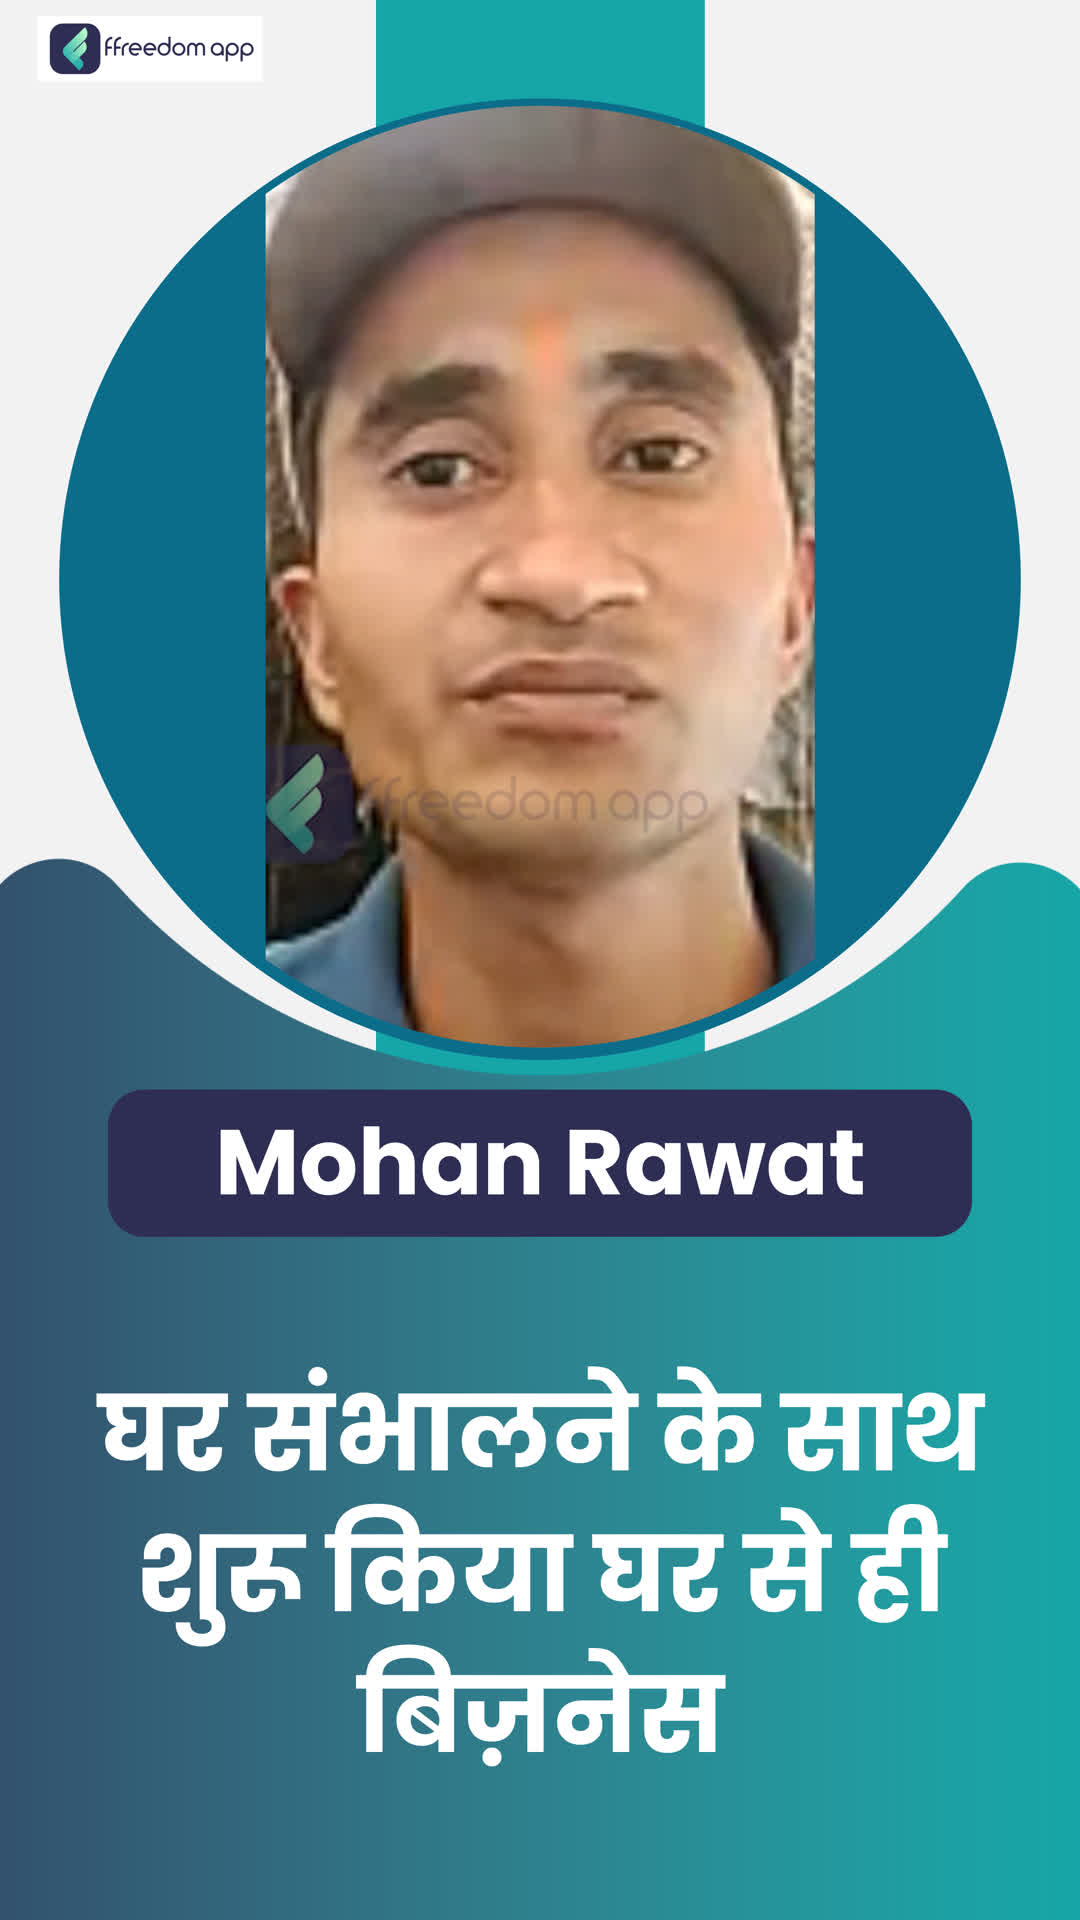 Mohan rao's Honest Review of ffreedom app - West Godavari ,Telangana